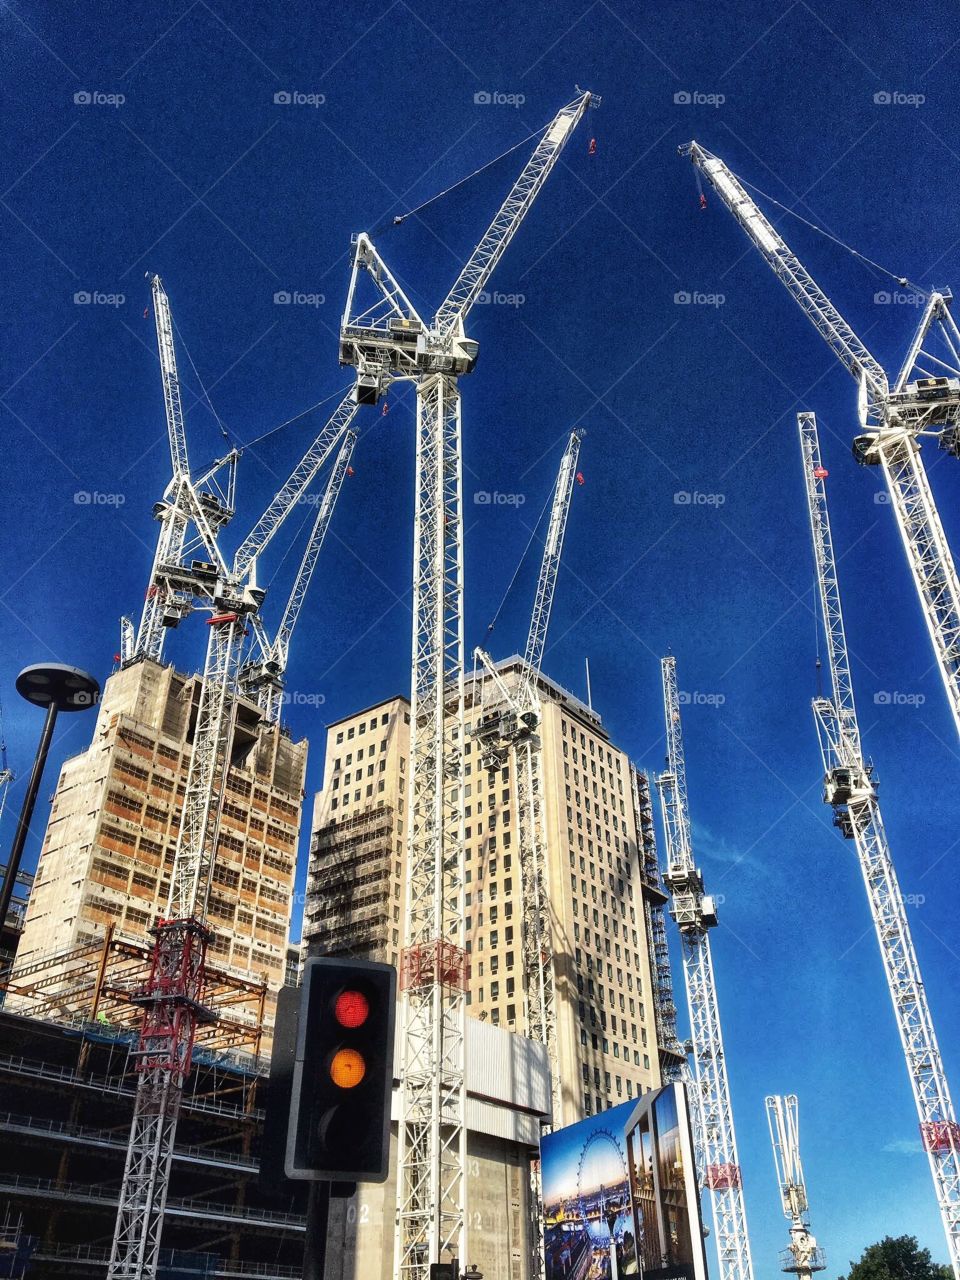 Cranes over North London buildings